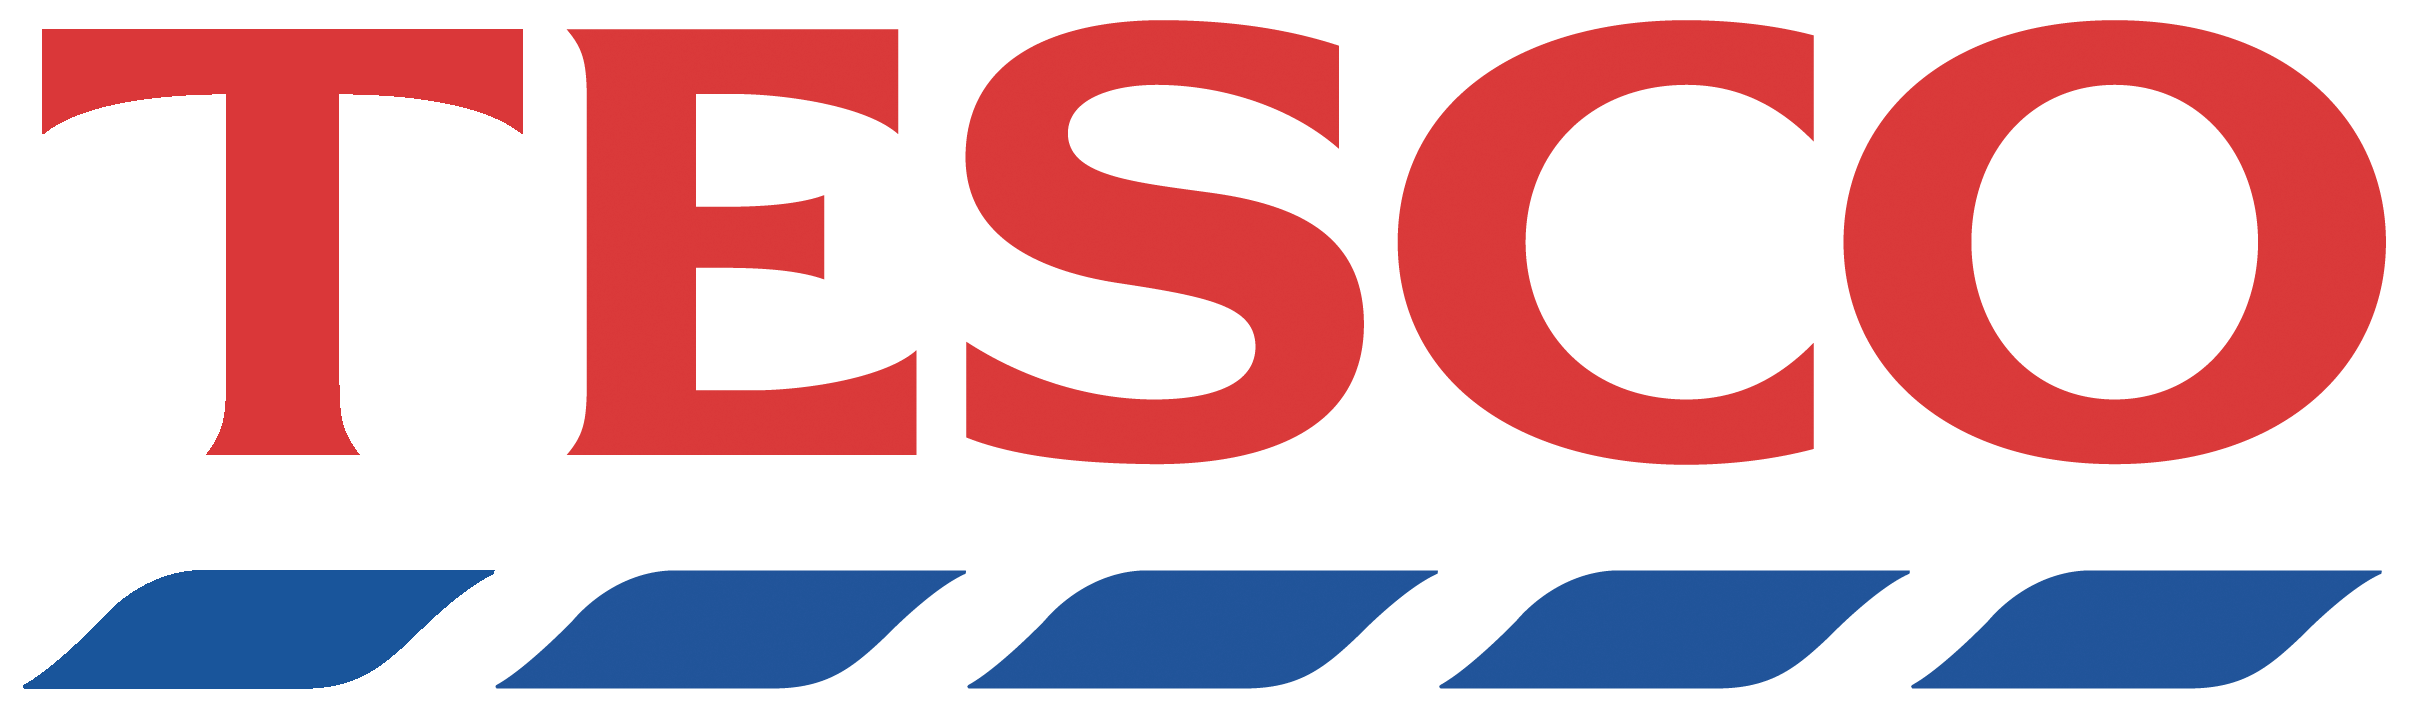 Tesco customer logo